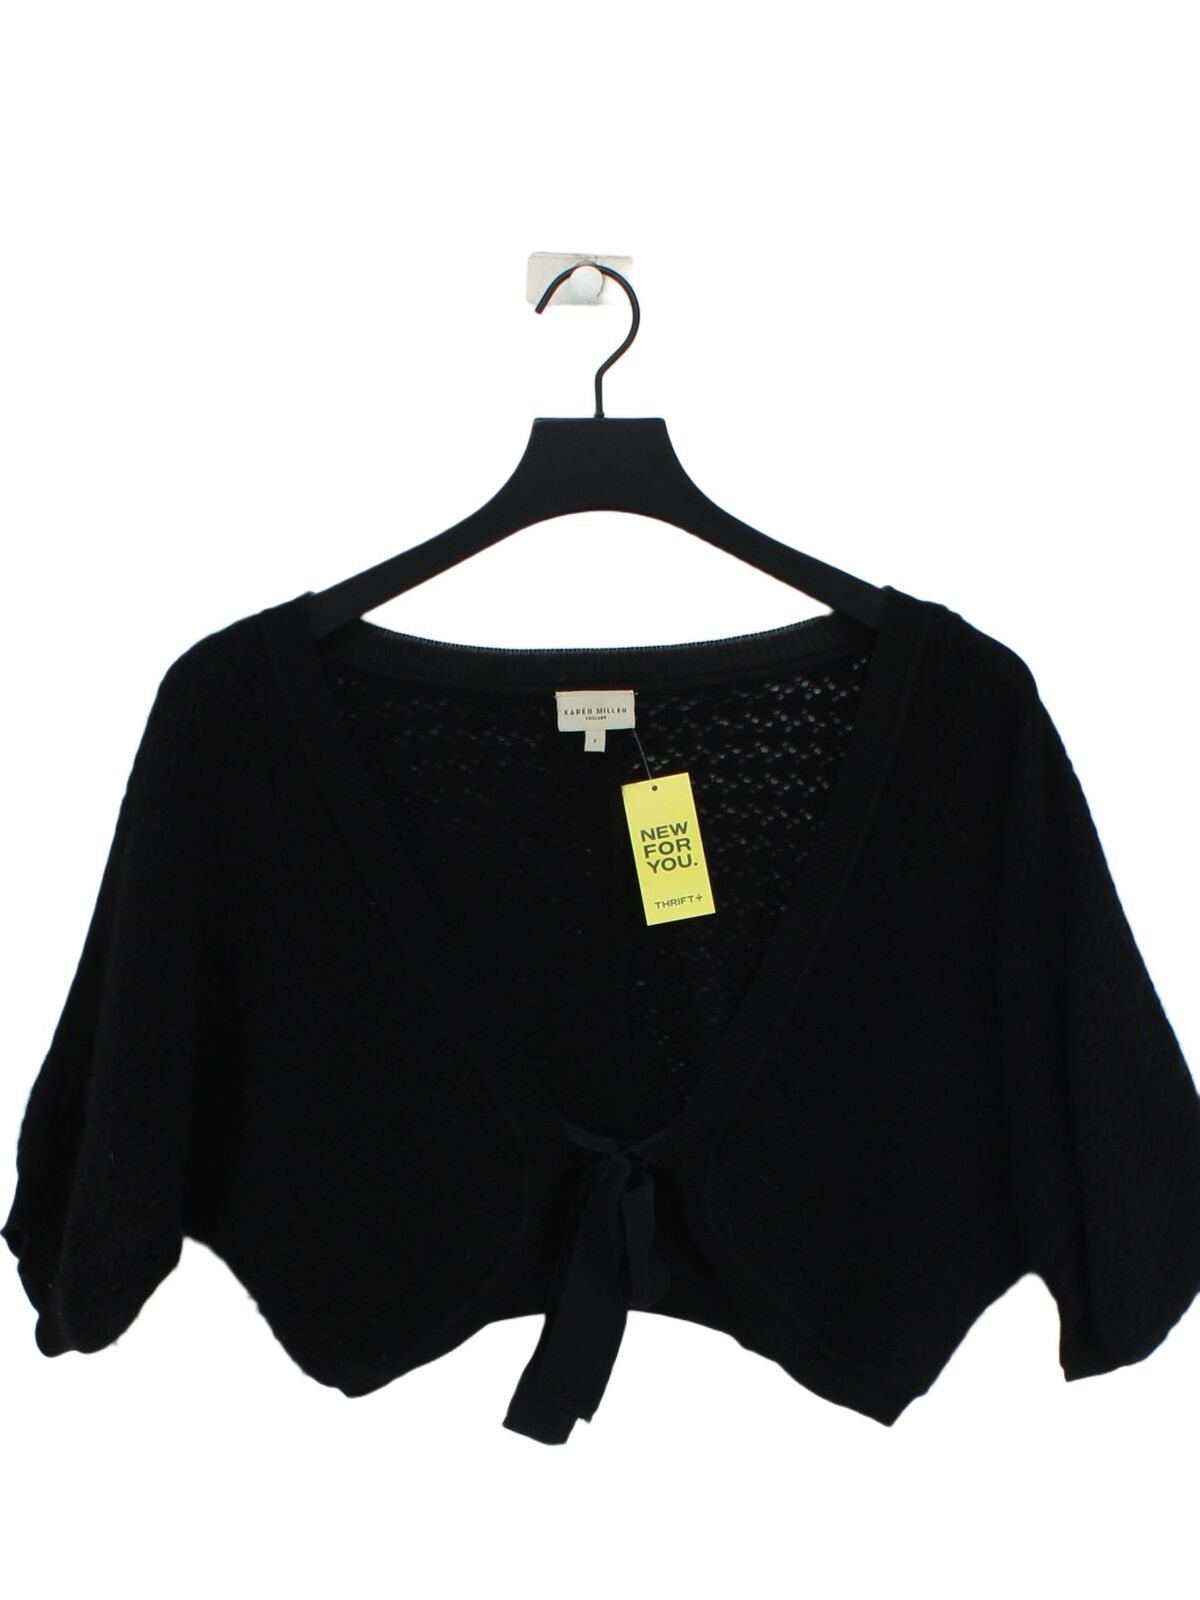 Karen Millen Women's Cardigan UK 10 Black Wool wi… - image 1